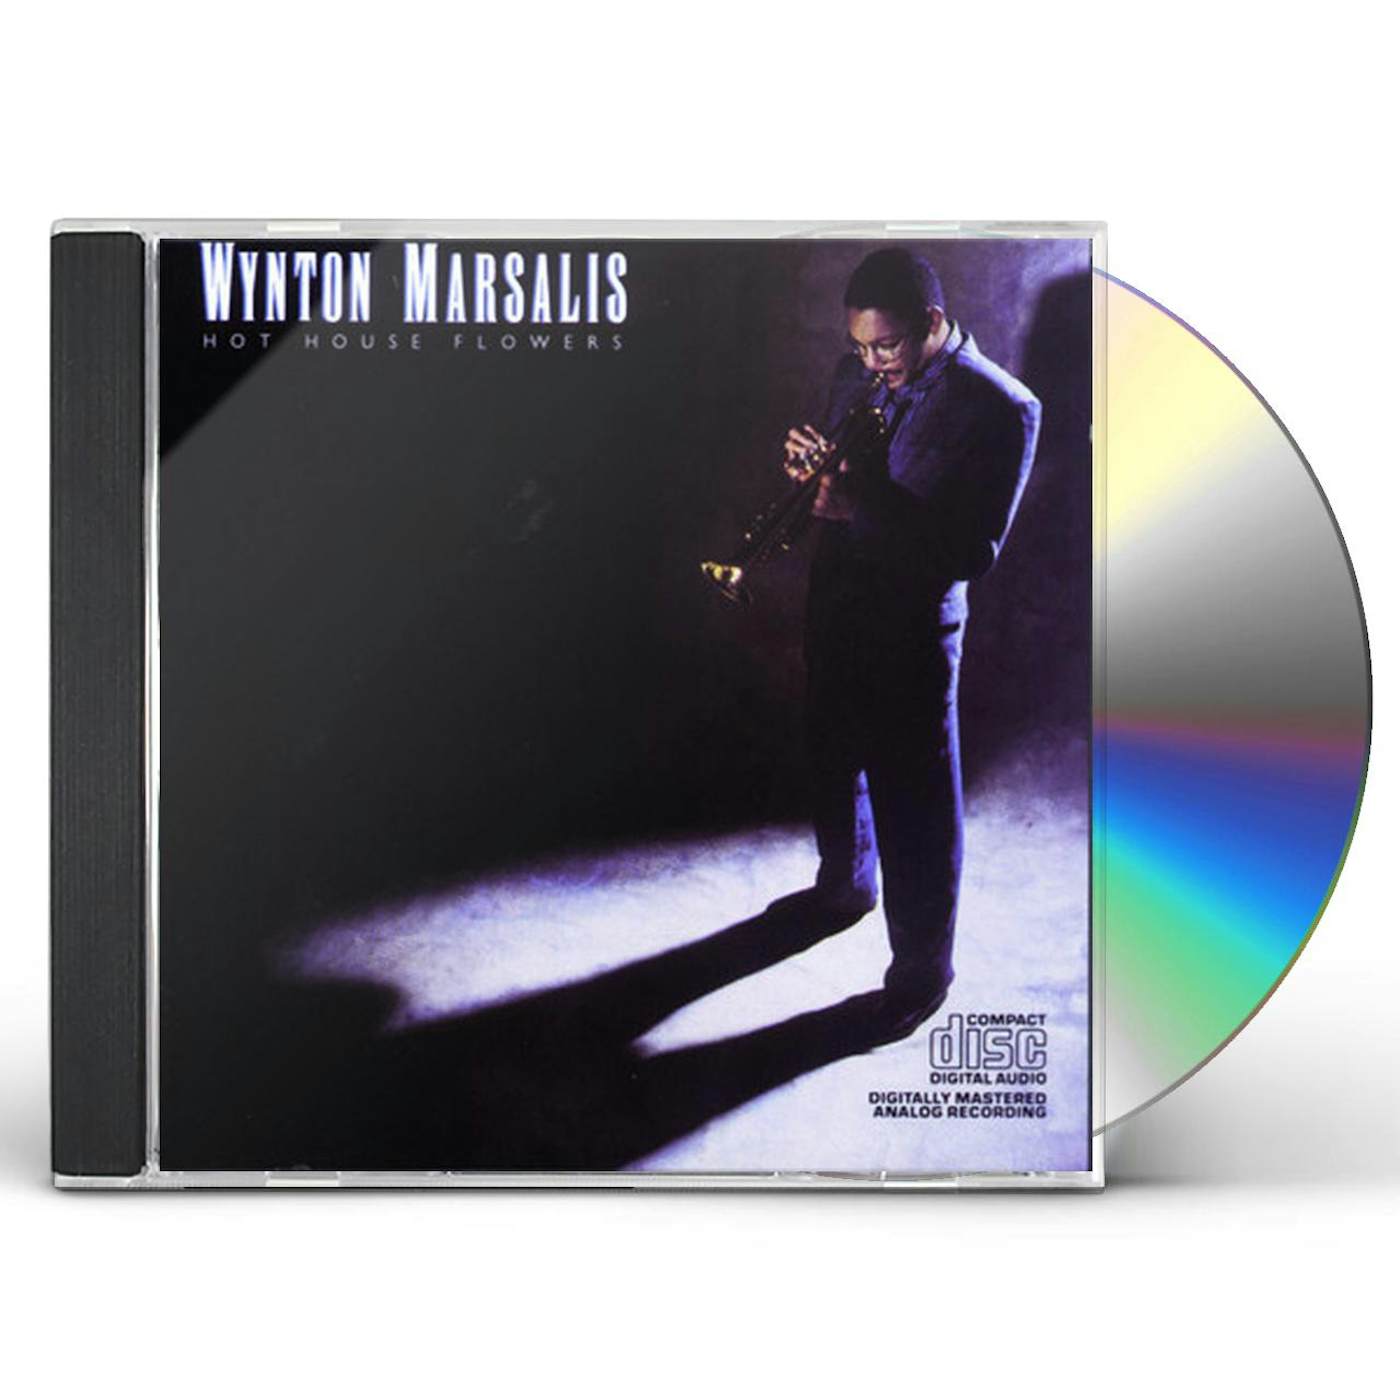 Wynton Marsalis CRESCENT CITY CHRISTMAS CARD CD $15.99$14.49